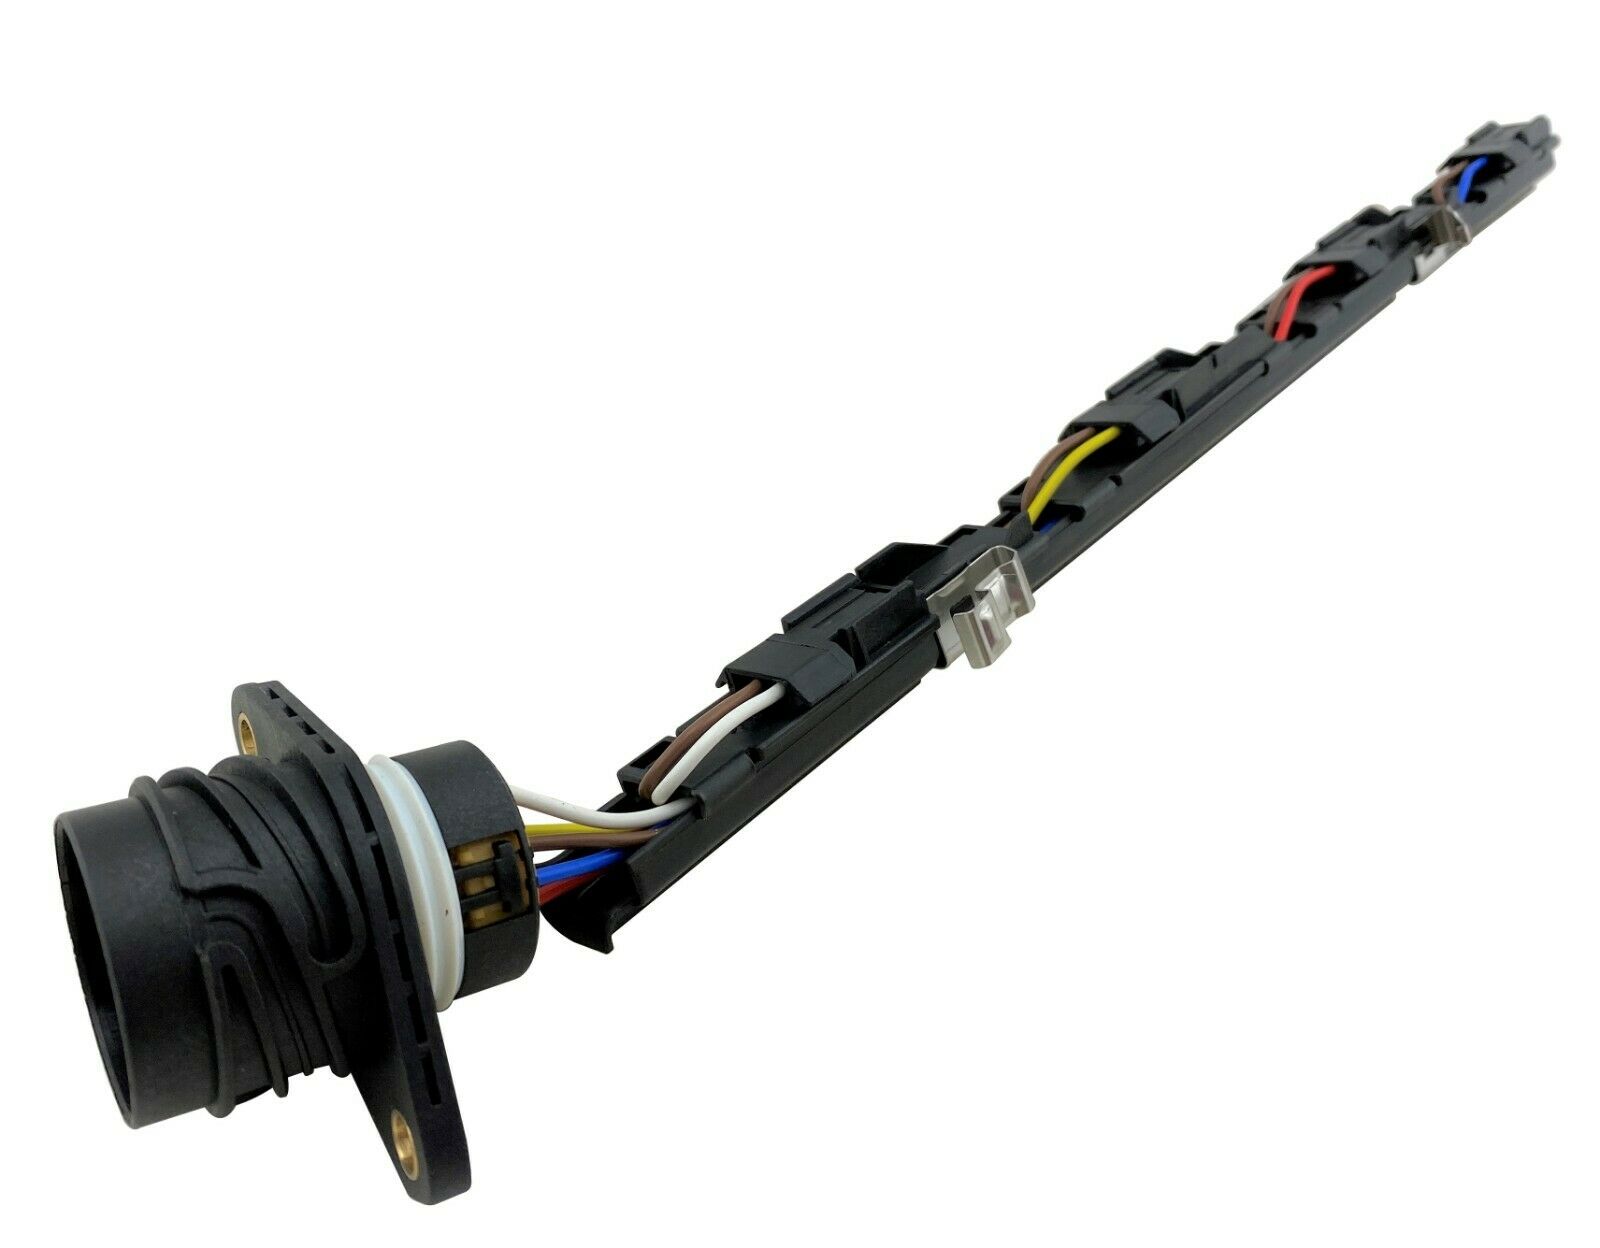 TDI 8v Diesel 1.9L 2.0L Injector Wiring Harness Kit for A3 A4 A6 VW PD